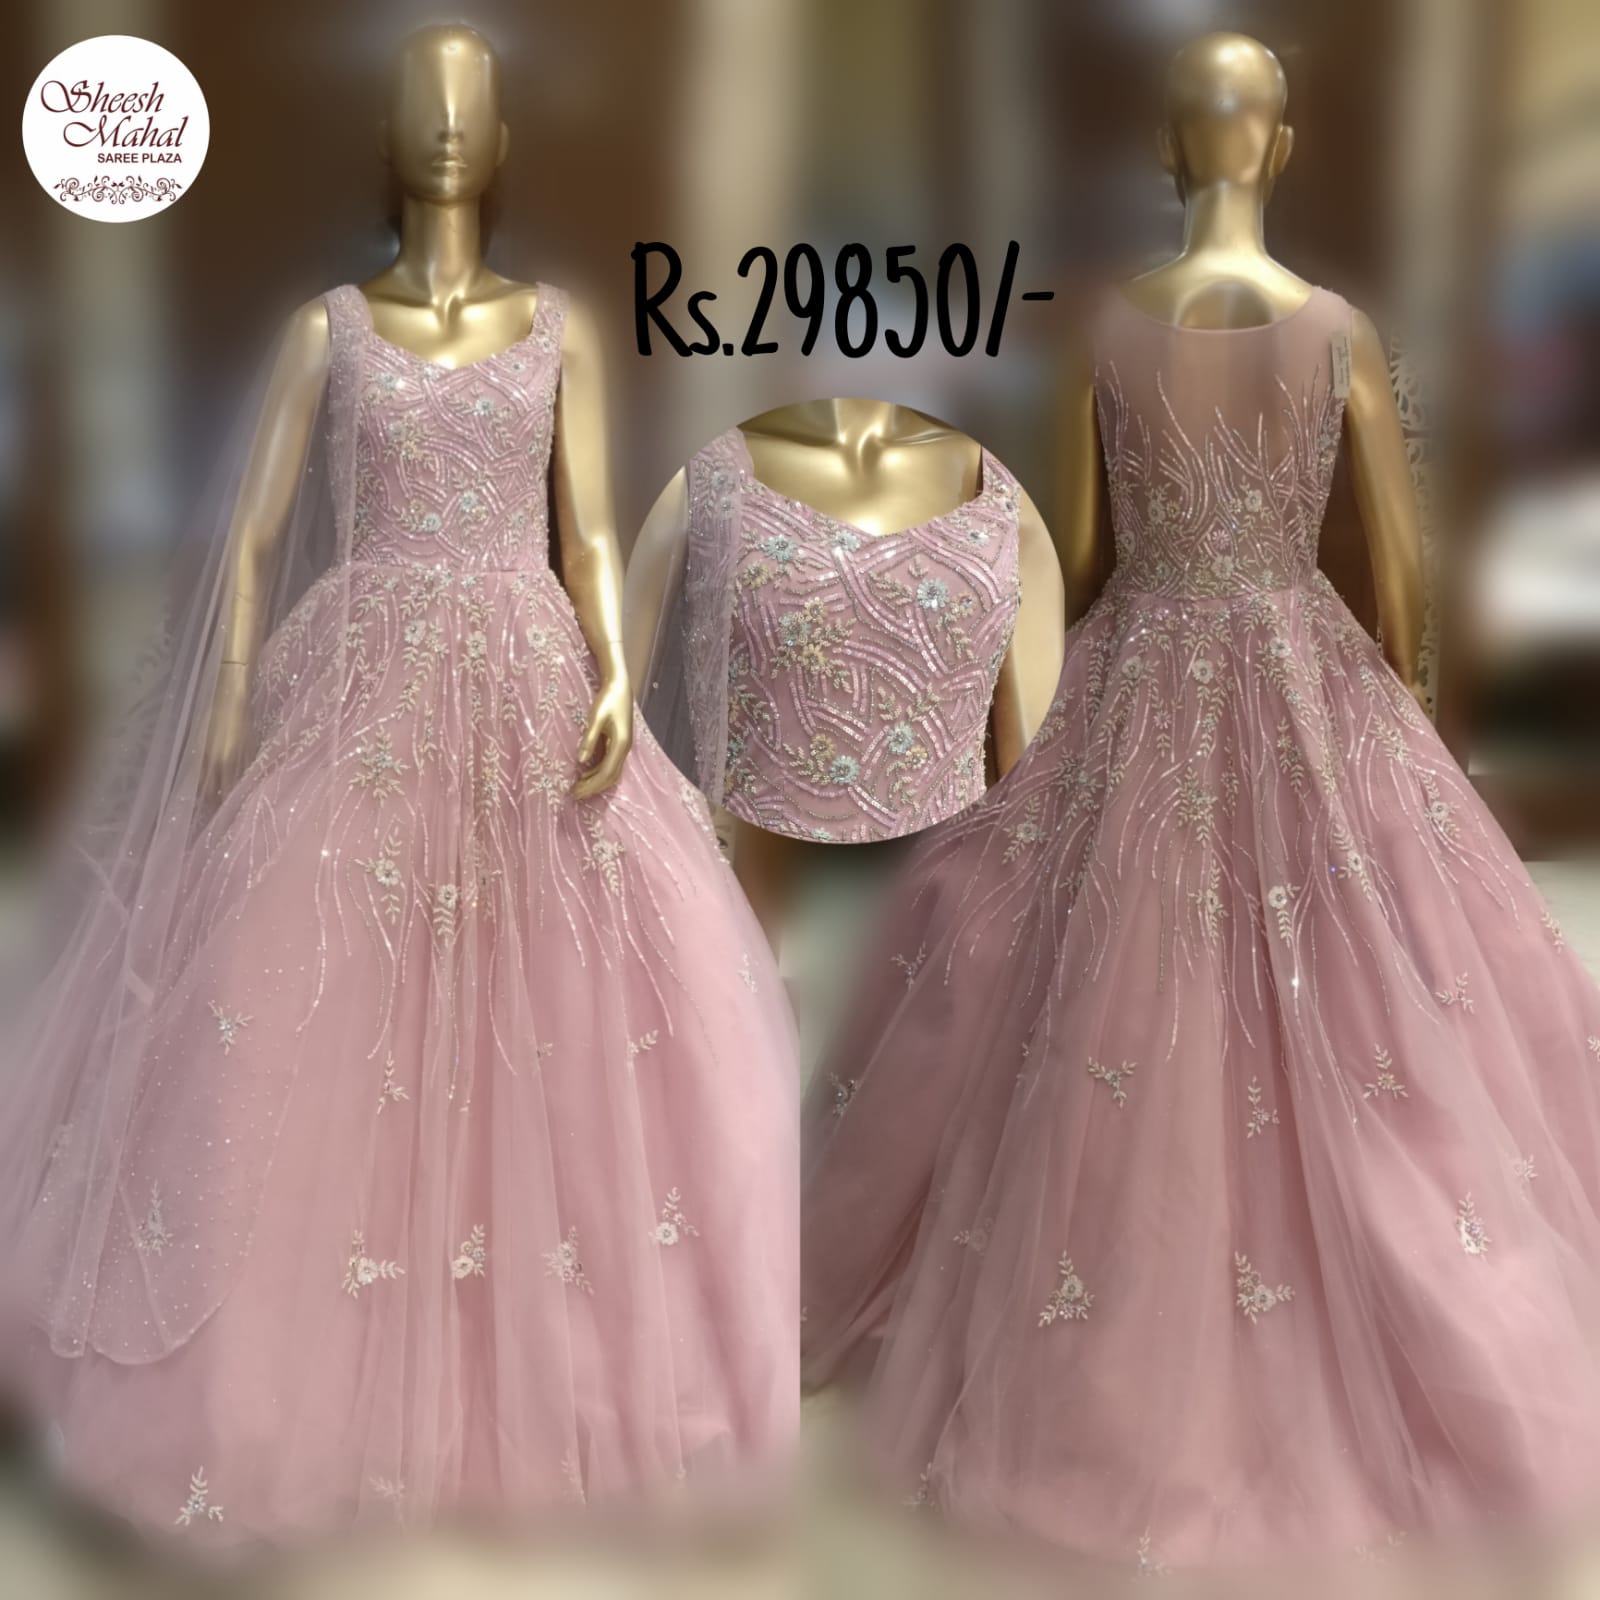 Integrity / Barbie 1:6 Scale Beautiful Princess Style Fashion Dress / Gown  🌸 | eBay